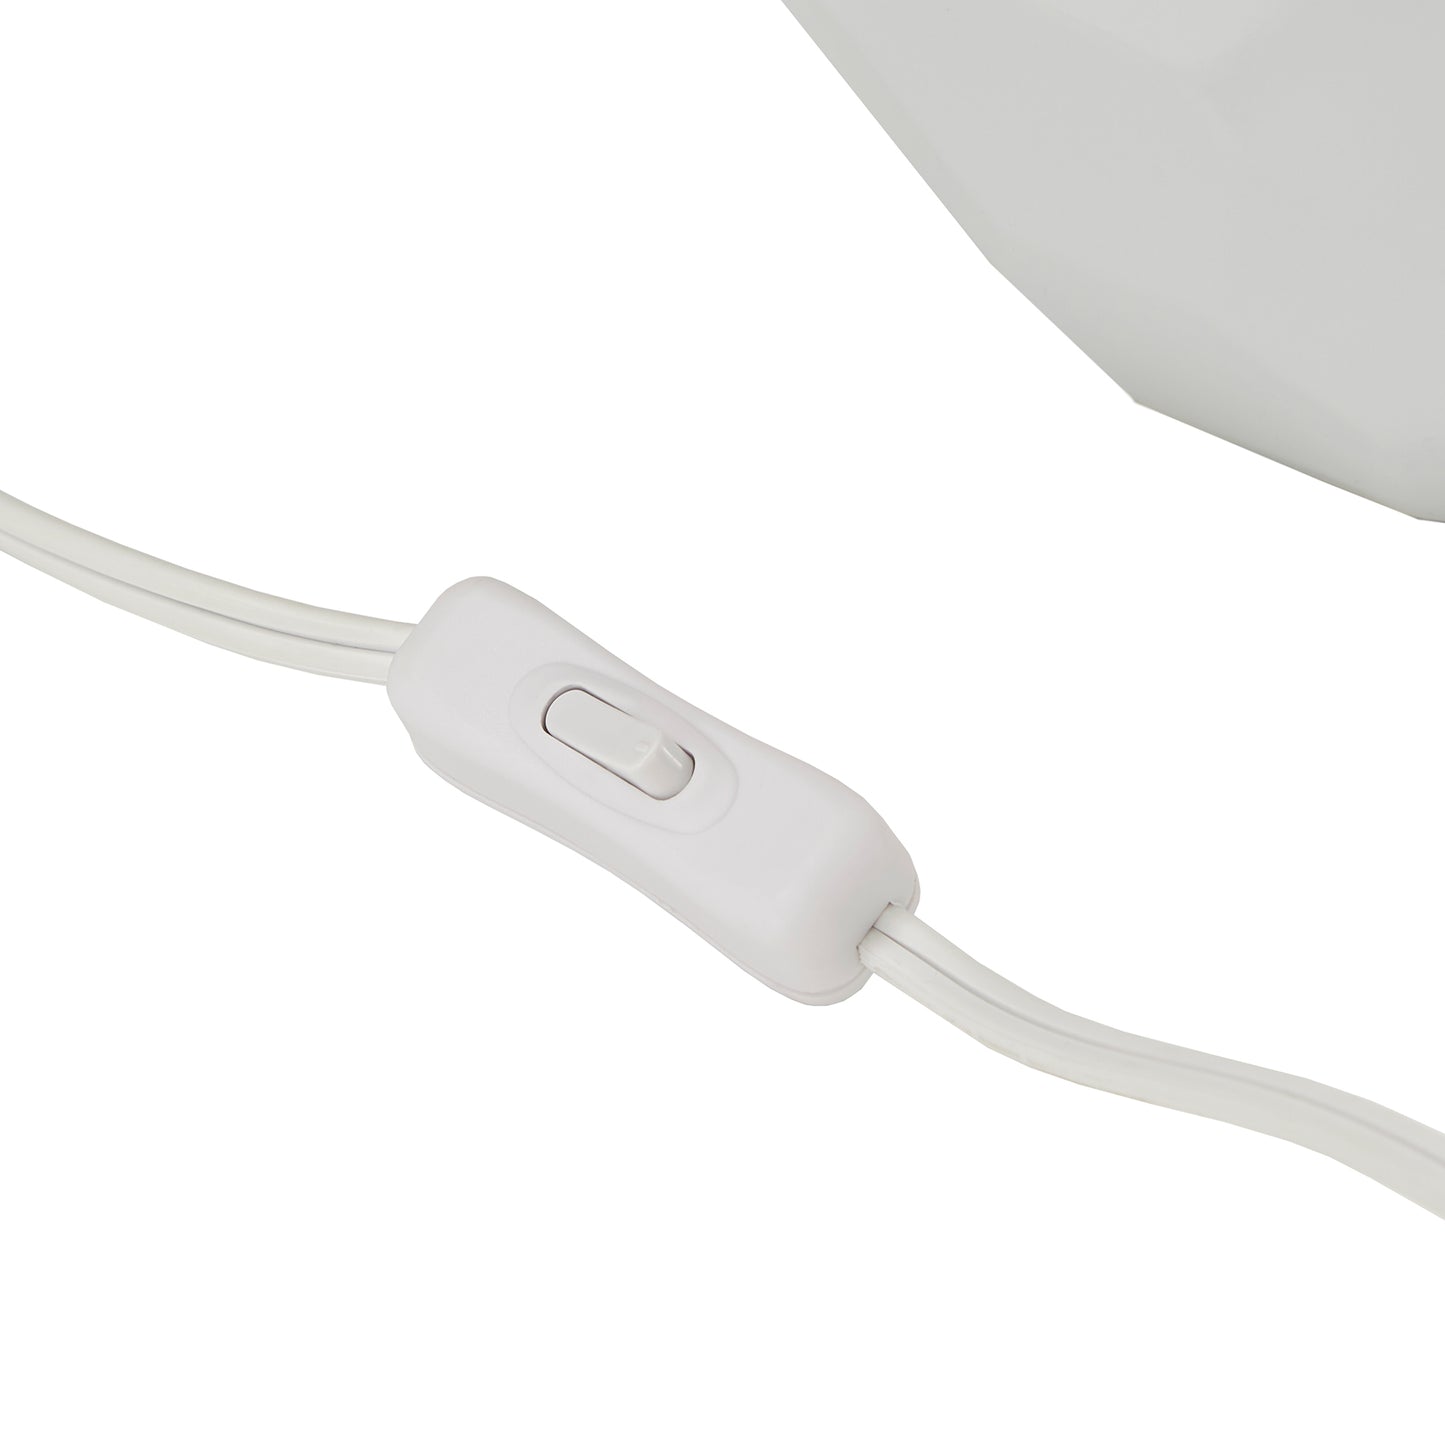 Modern Drum Shade Table Lamp - White